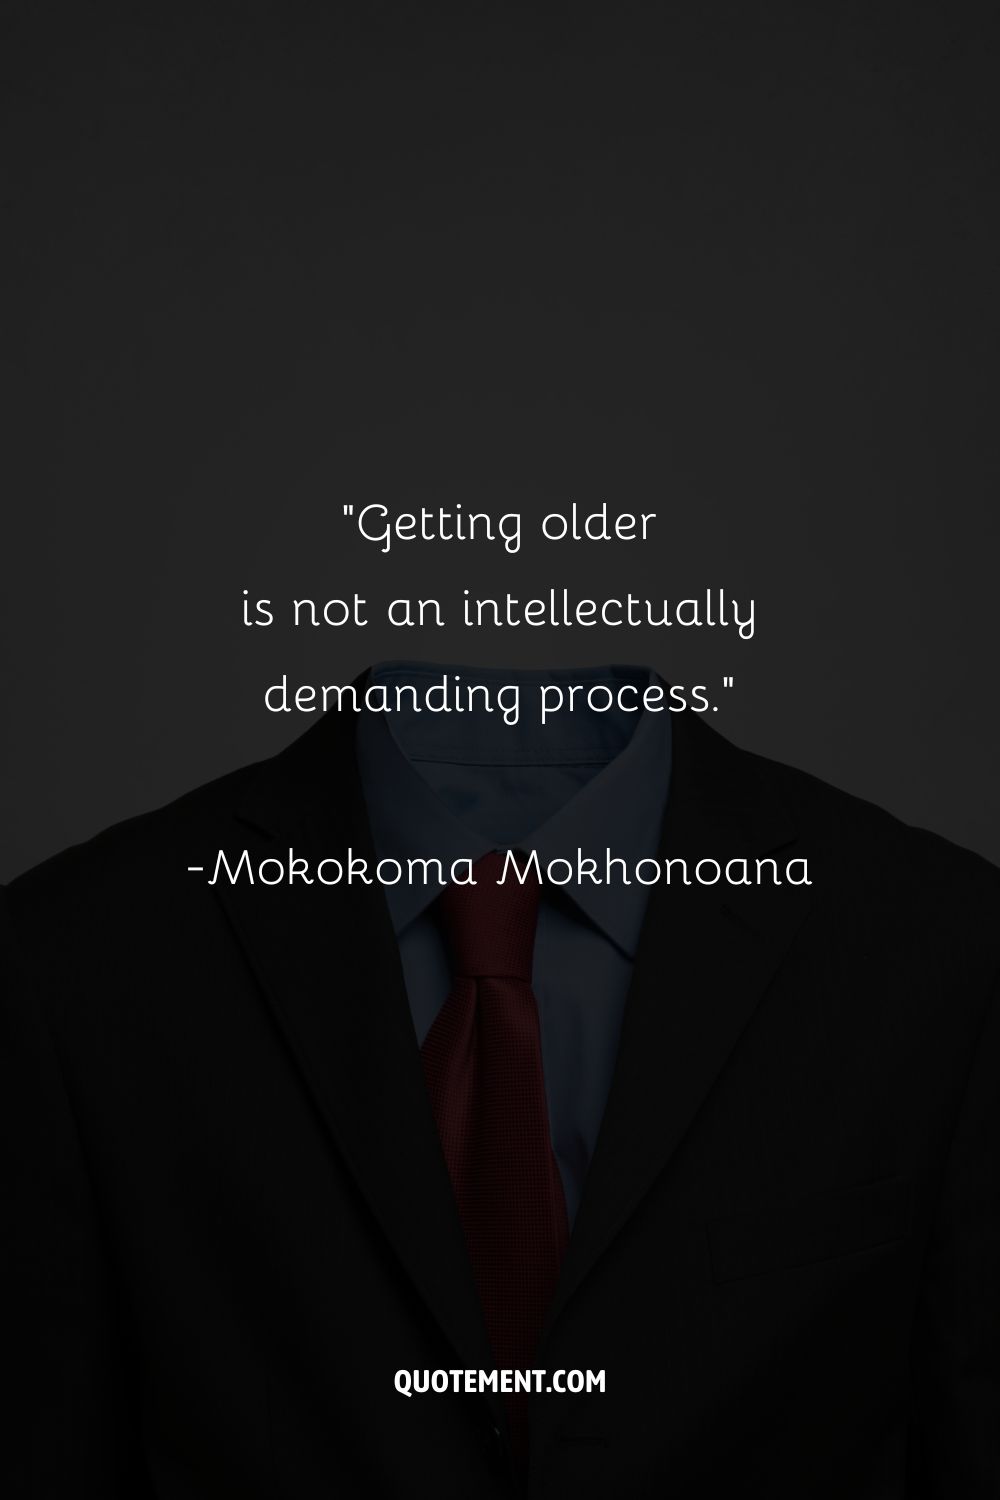 “Getting older is not an intellectually demanding process.”